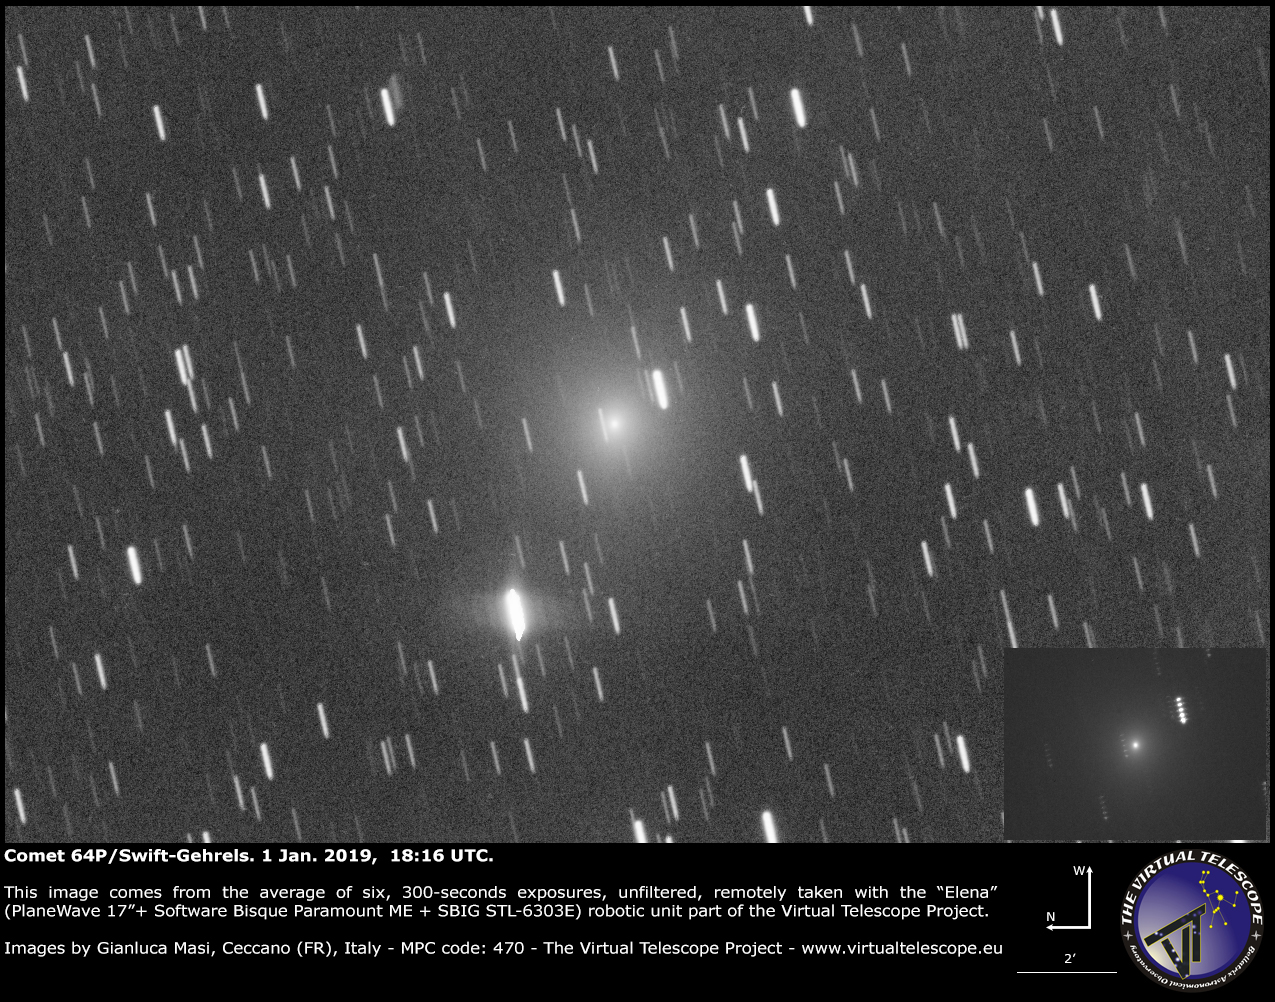 Comet 64P/Swift-Gehrels: an image (1 Jan. 2019) - The Virtual Telescope ...